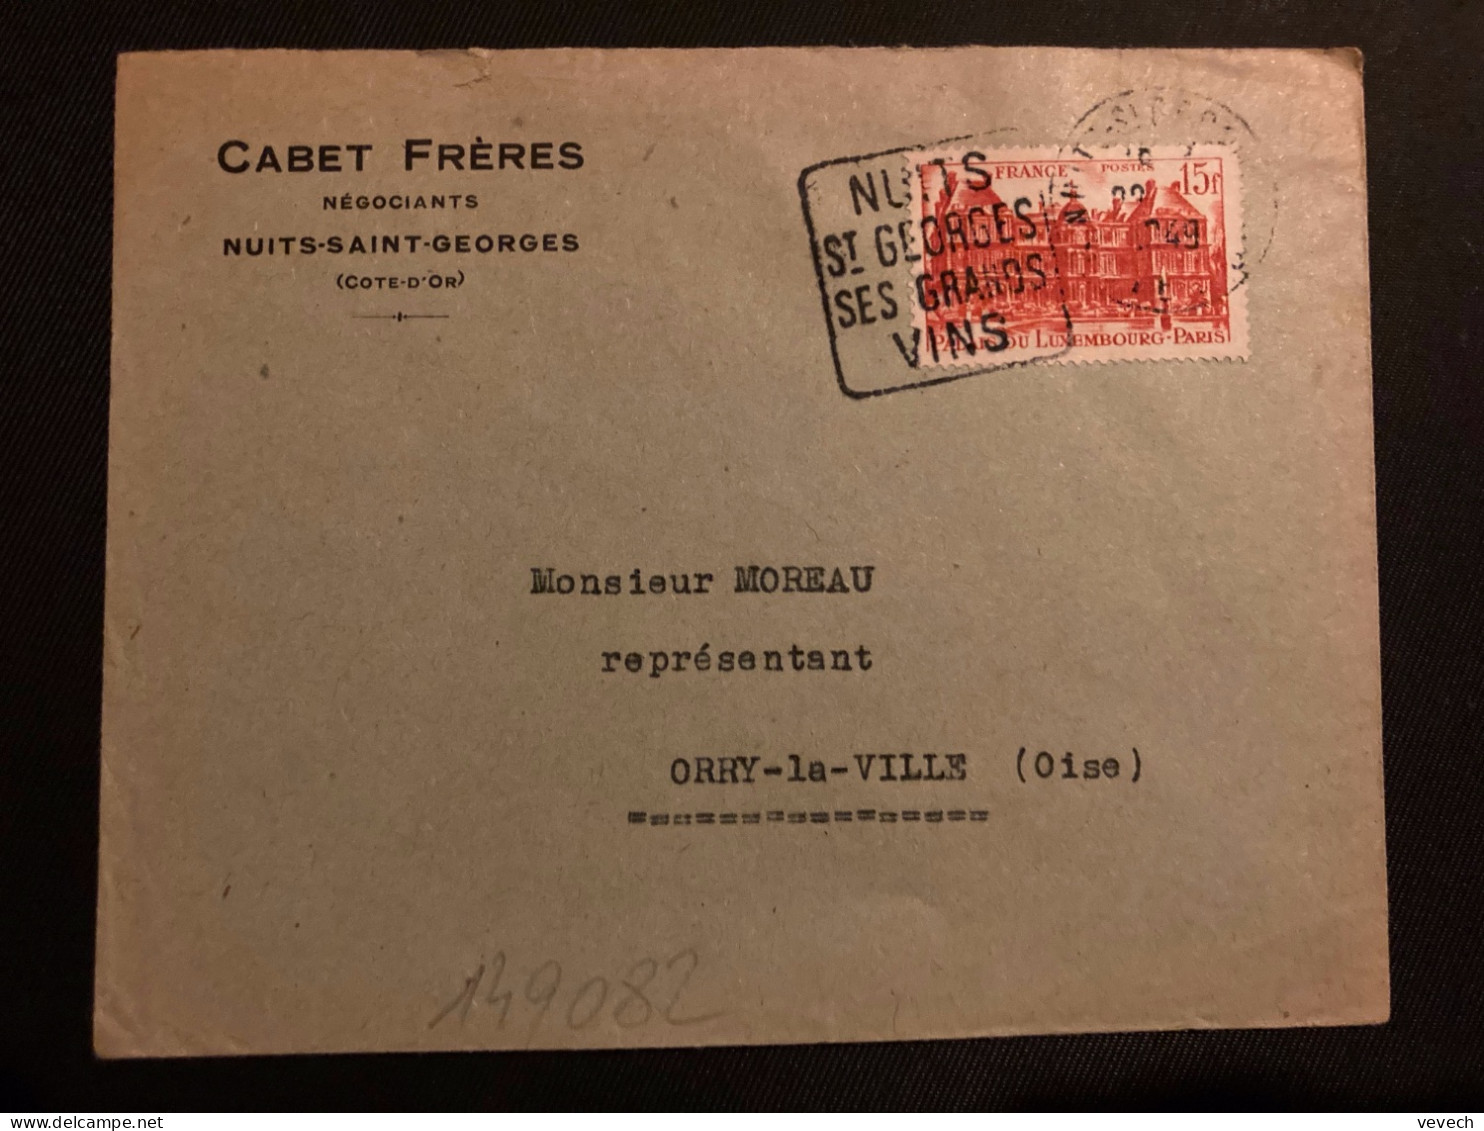 LETTRE CABET FRERES NEGOCIANTS TP PALAIS DU LUXEMBOURG 15F OBL. DAGUIN 22-? 1949 NUITS ST GEORGES COTE D'OR (21) SES GRA - Mechanical Postmarks (Other)